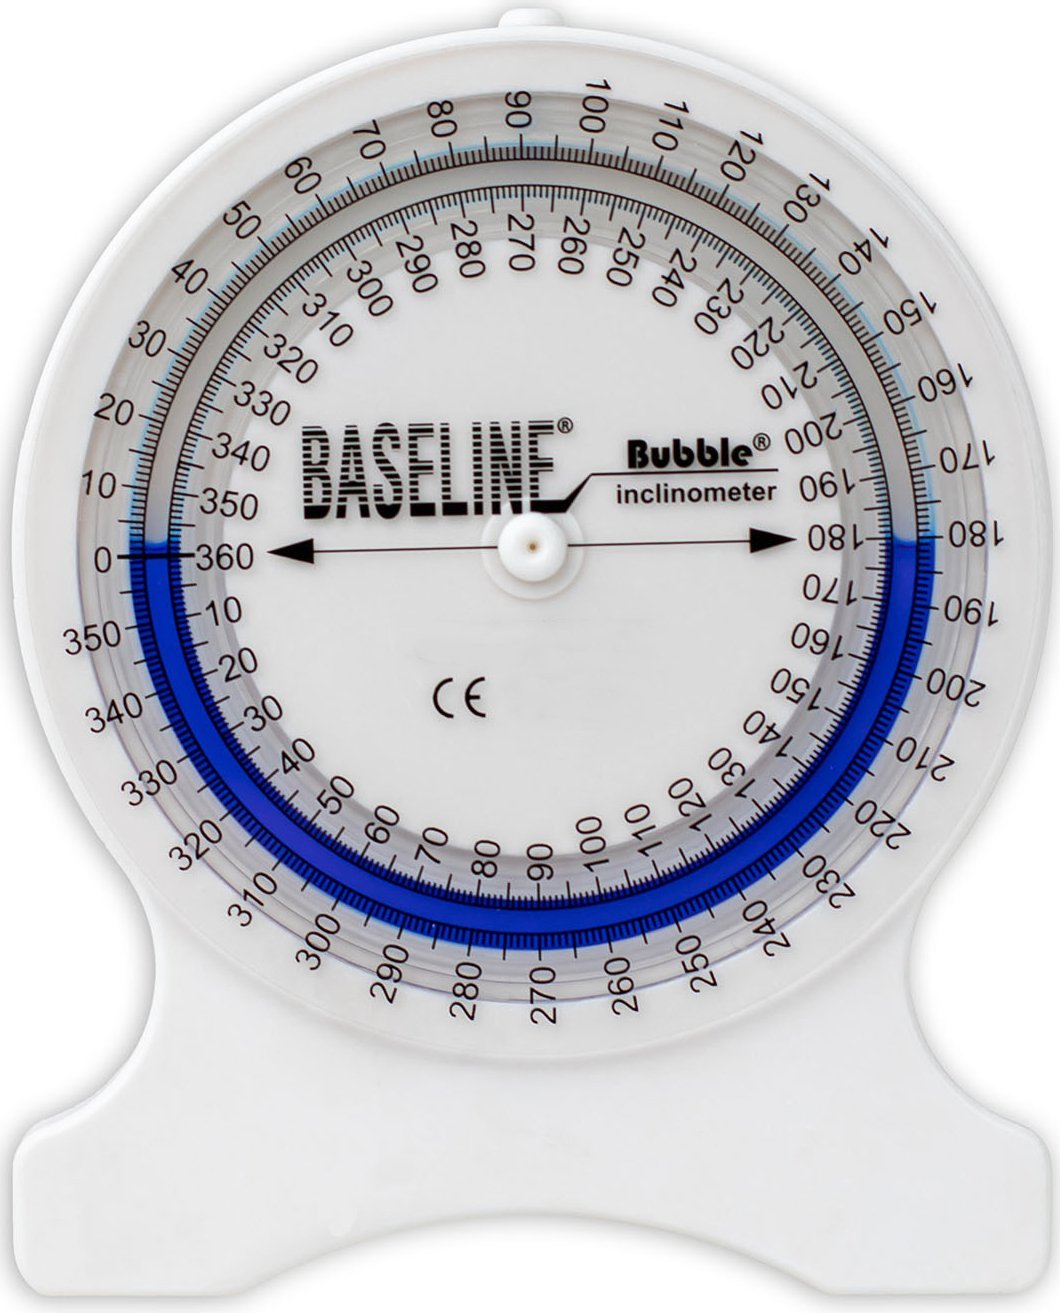 Bubble inclinometer Baseline